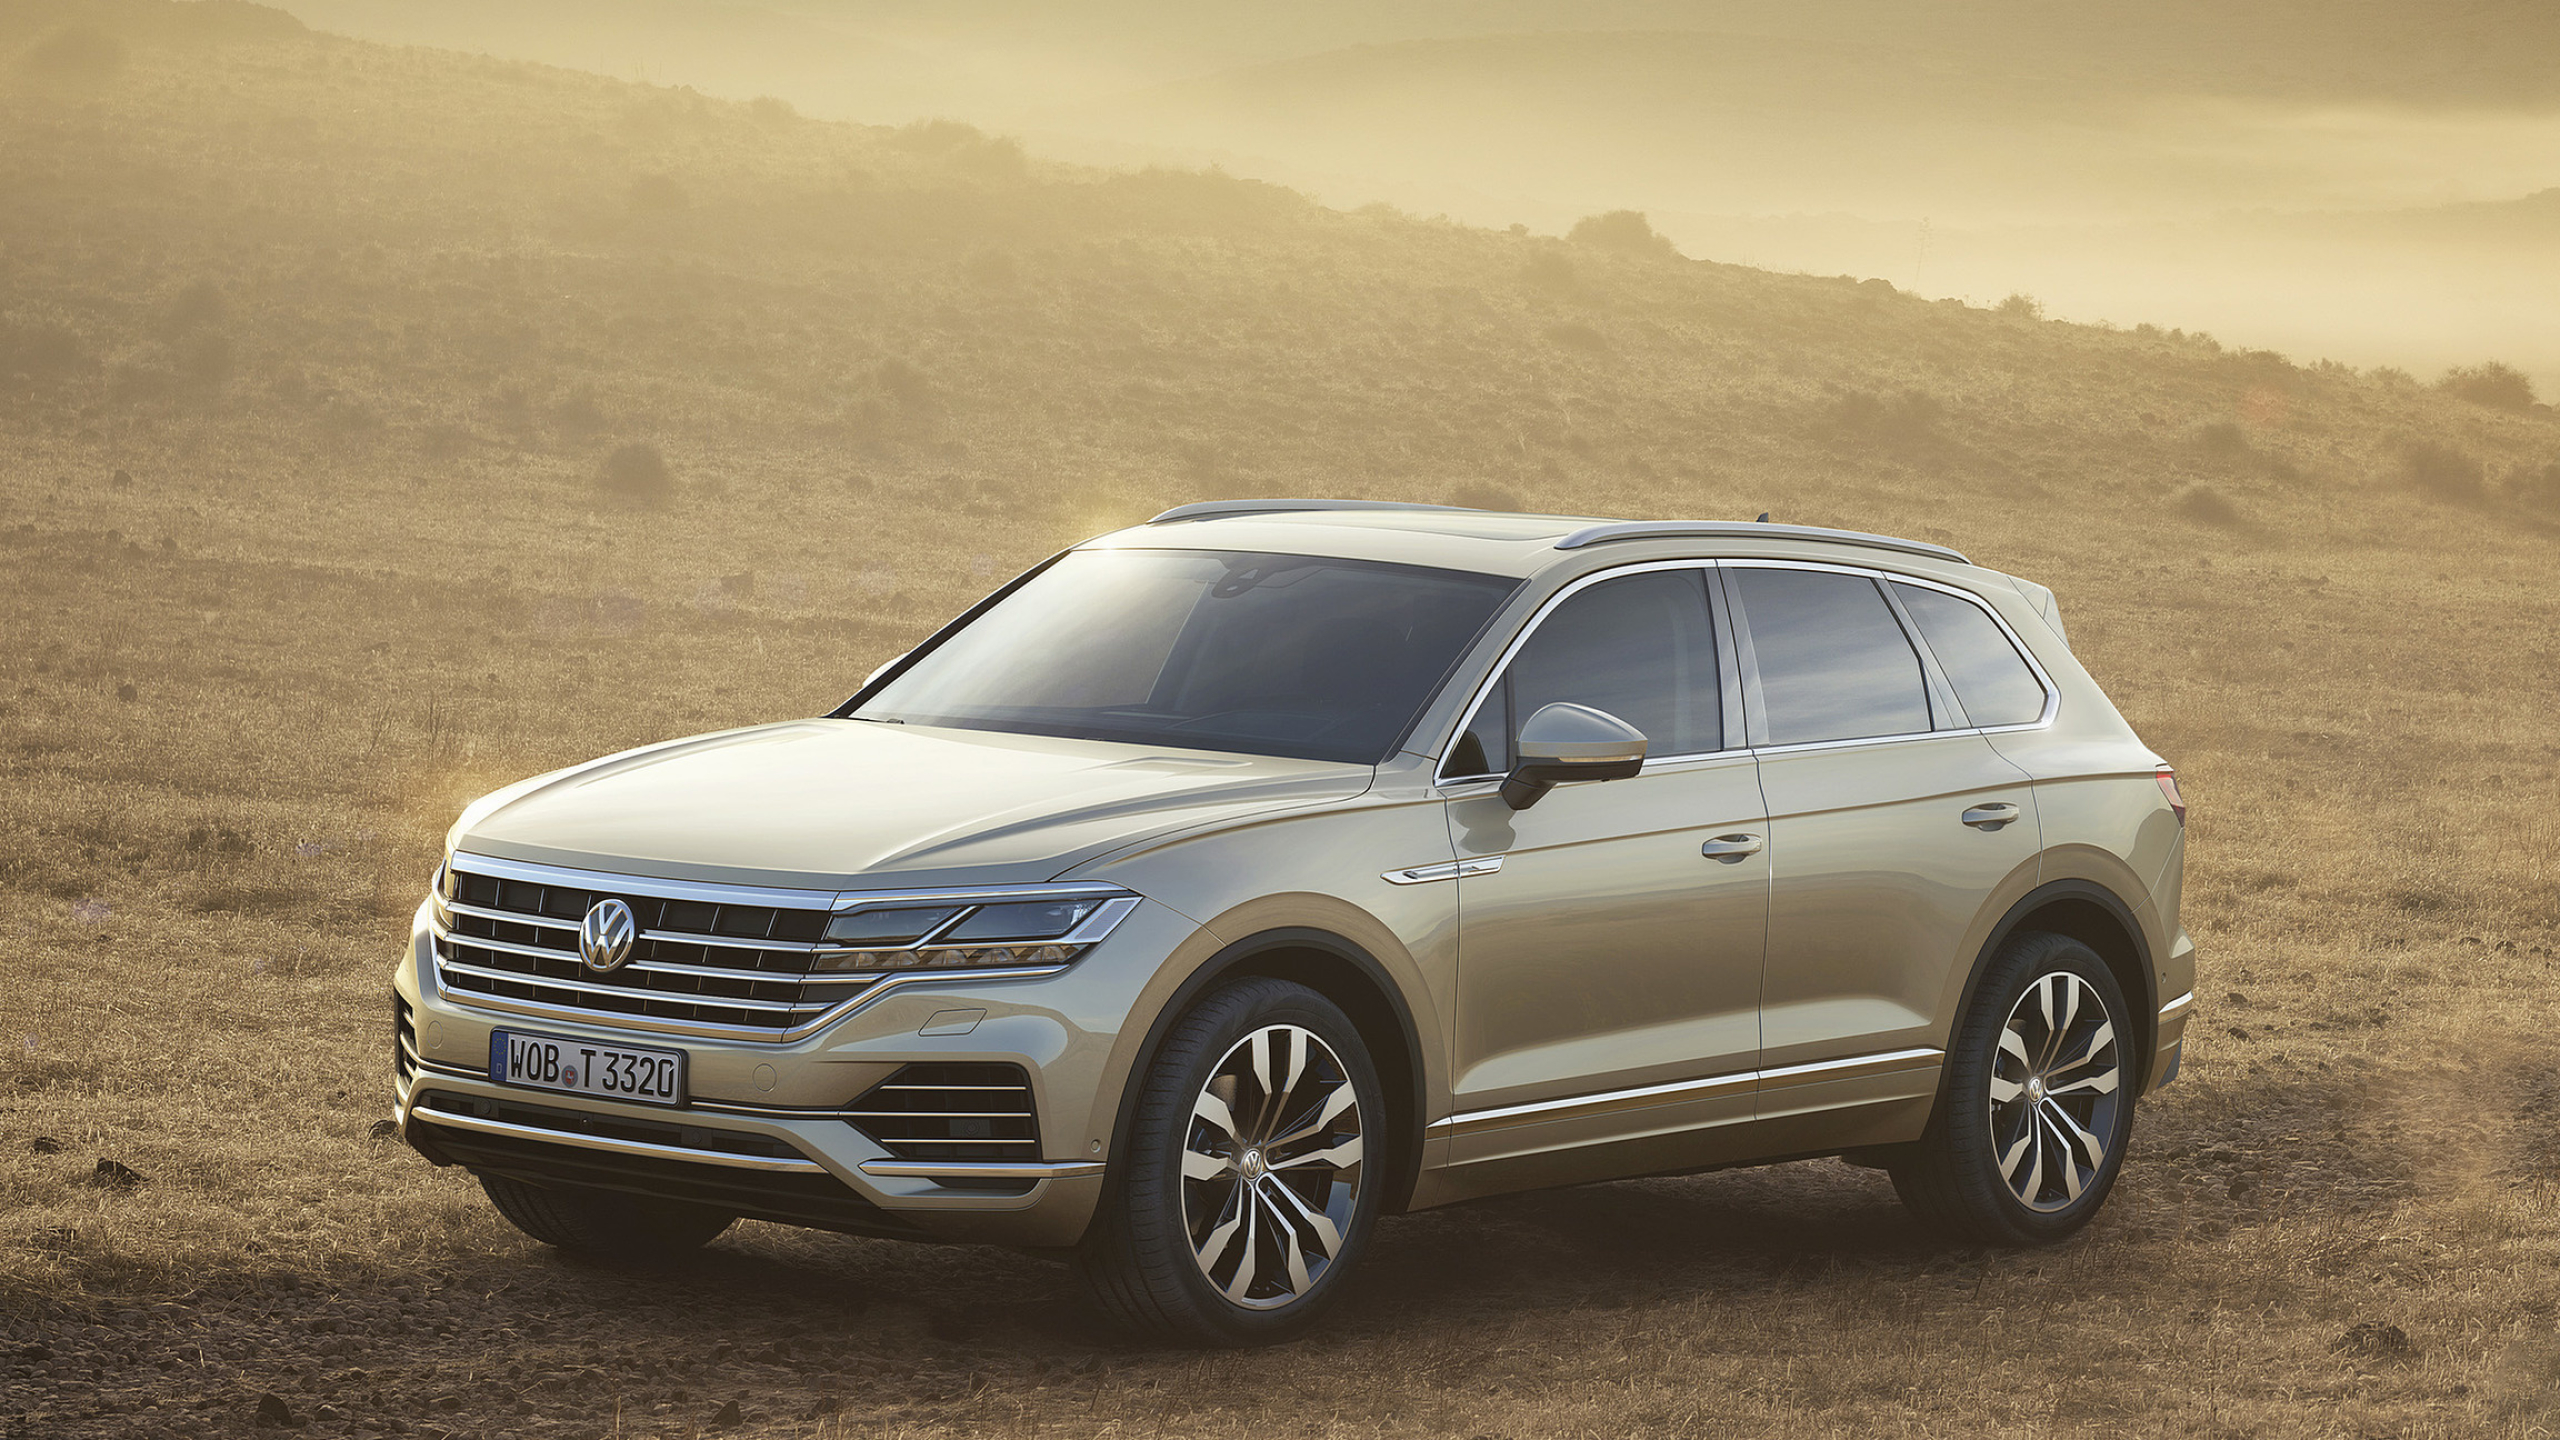 Volkswagen Touareg, Striking front-end design, High-resolution wallpaper, Automotive excellence, 2560x1440 HD Desktop